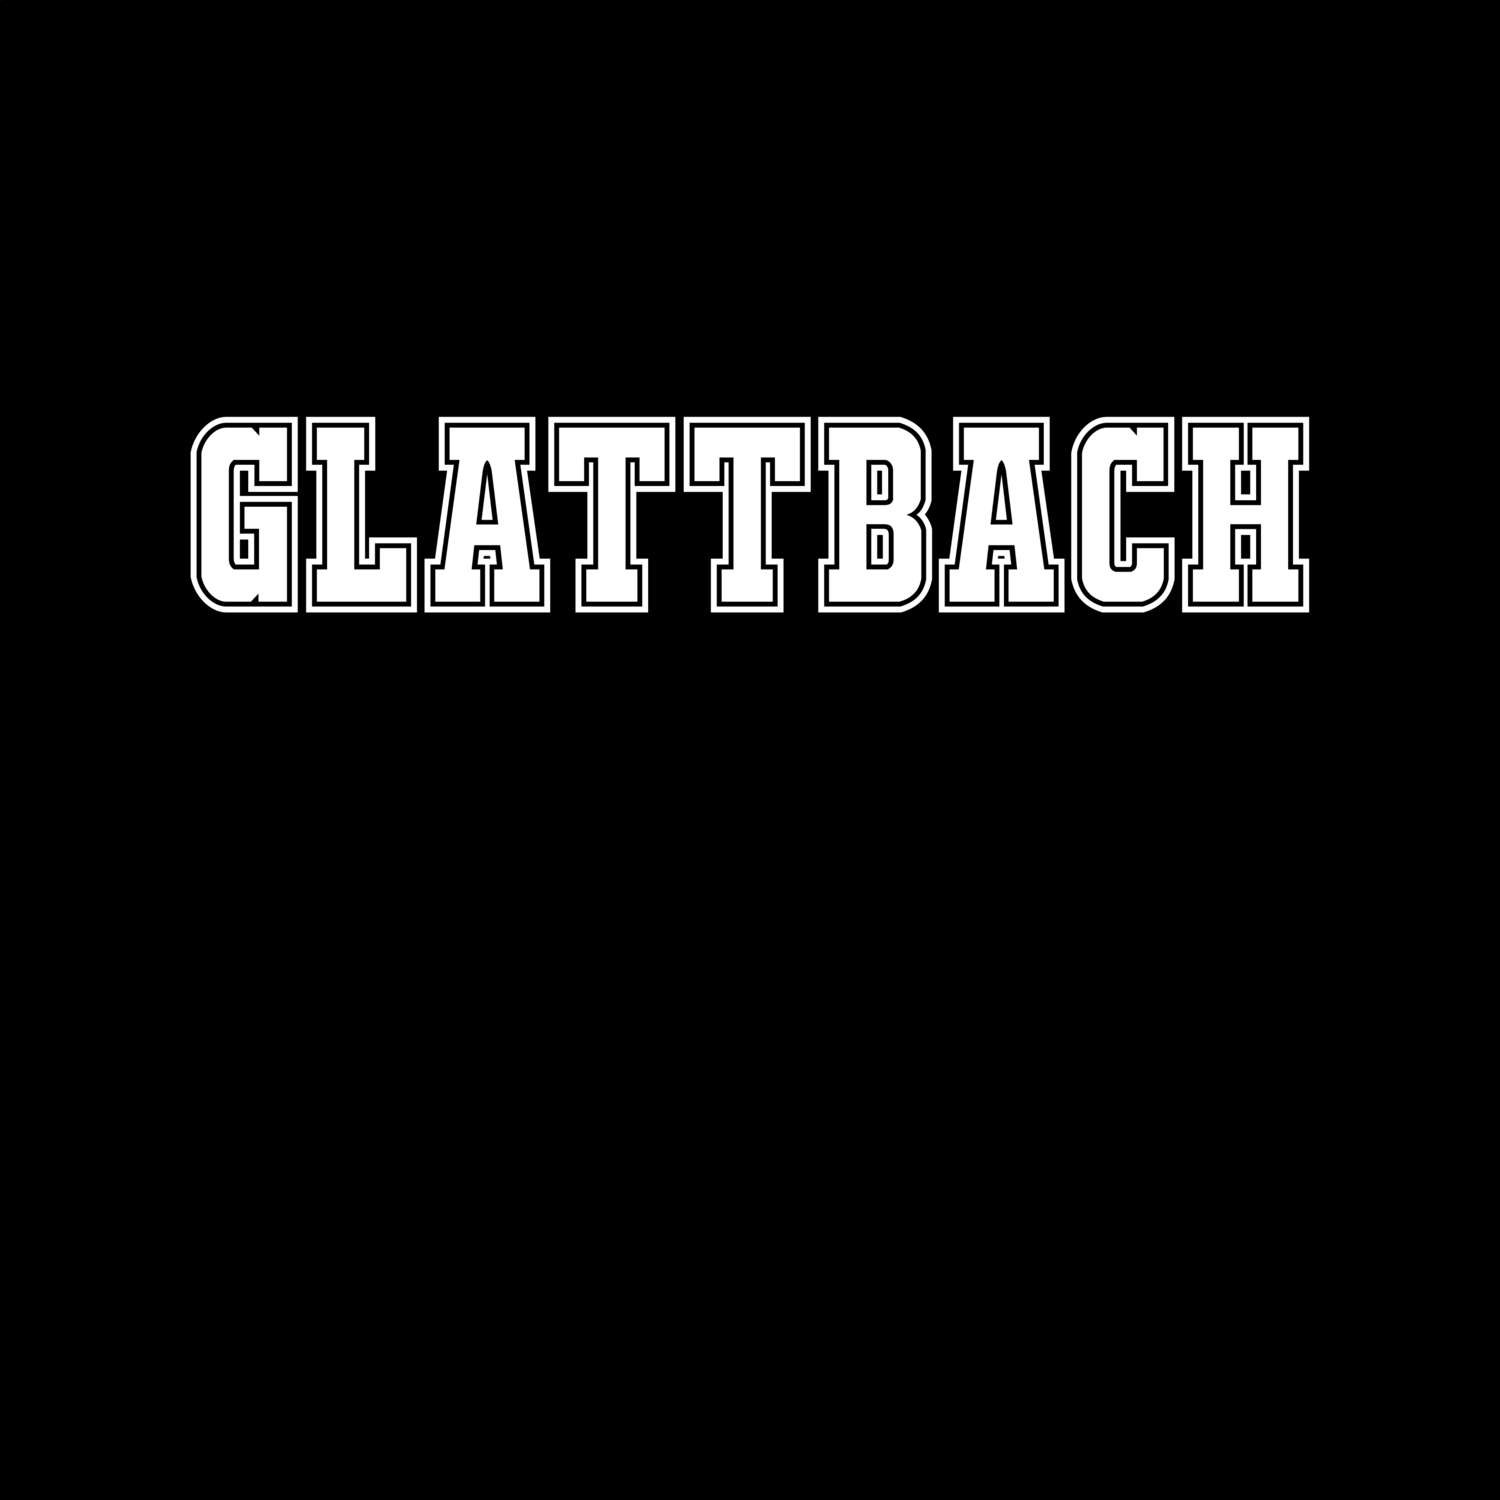 Glattbach T-Shirt »Classic«